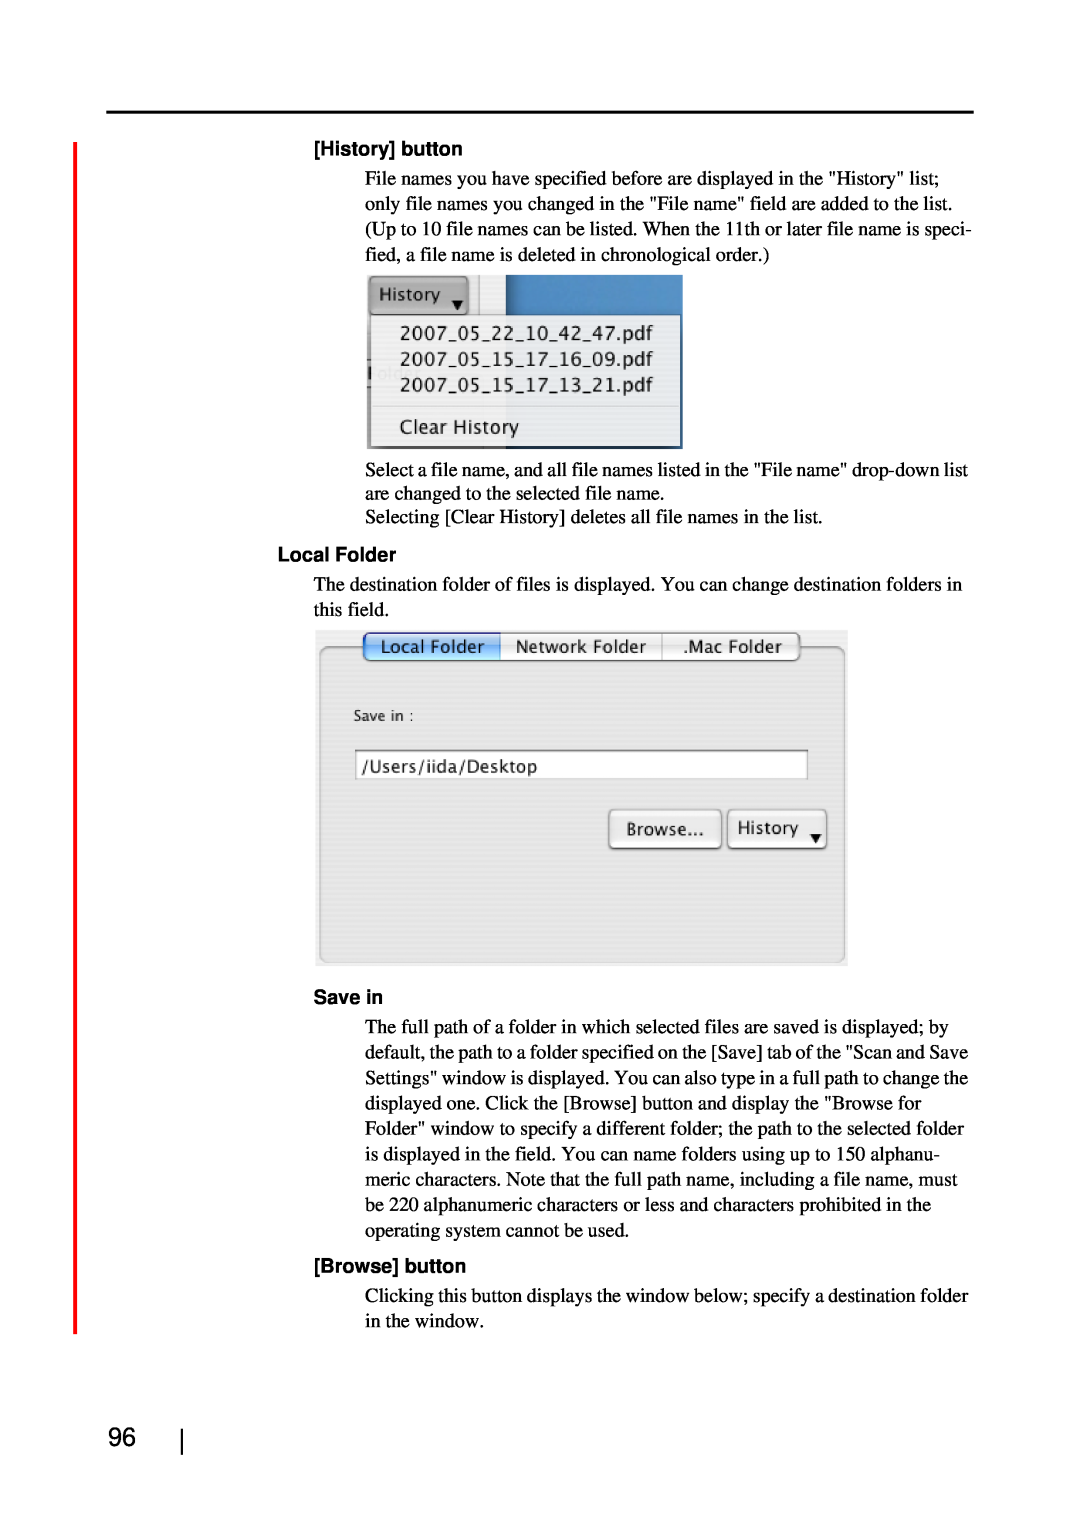 Fujitsu S510M manual History button, Local Folder, Save in, Browse button 